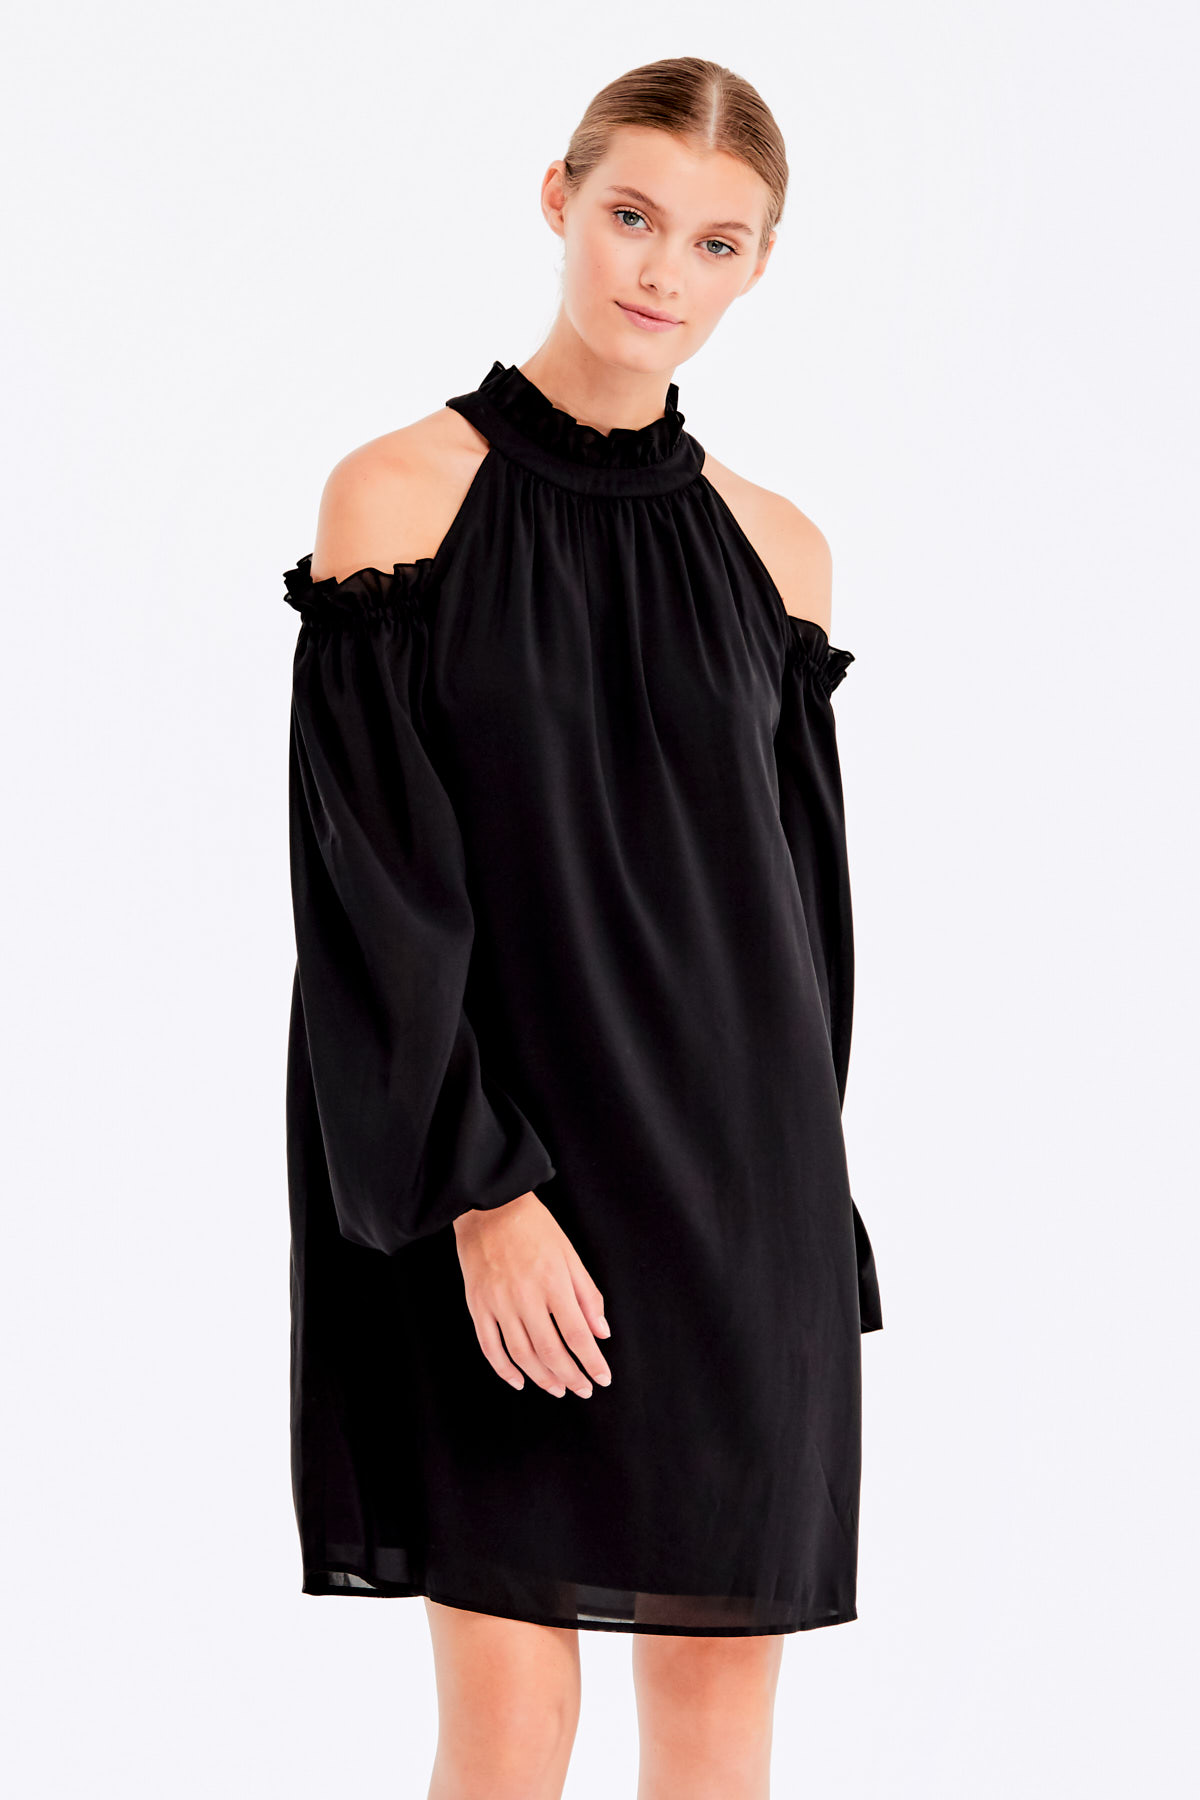 Open shoulder black chiffon dress, photo 2